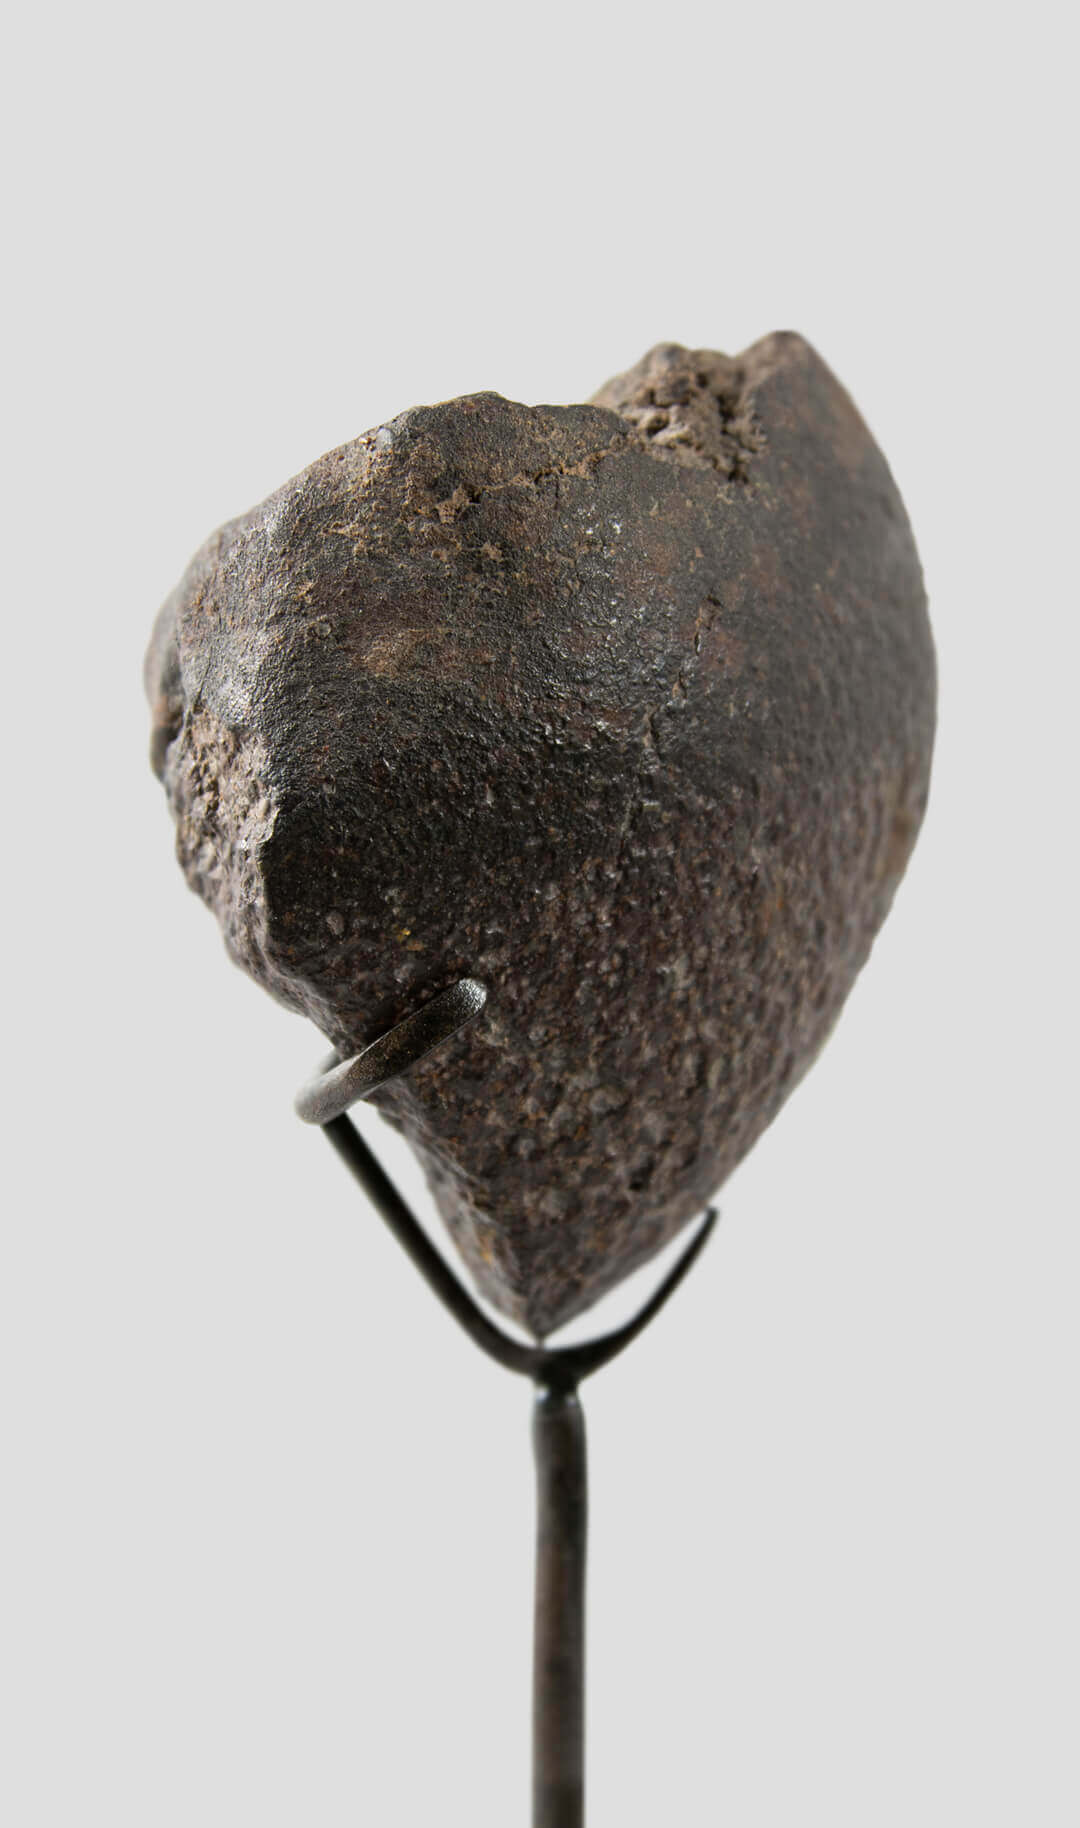 rare h5 nwa meteorite for sale on bronze stand 299